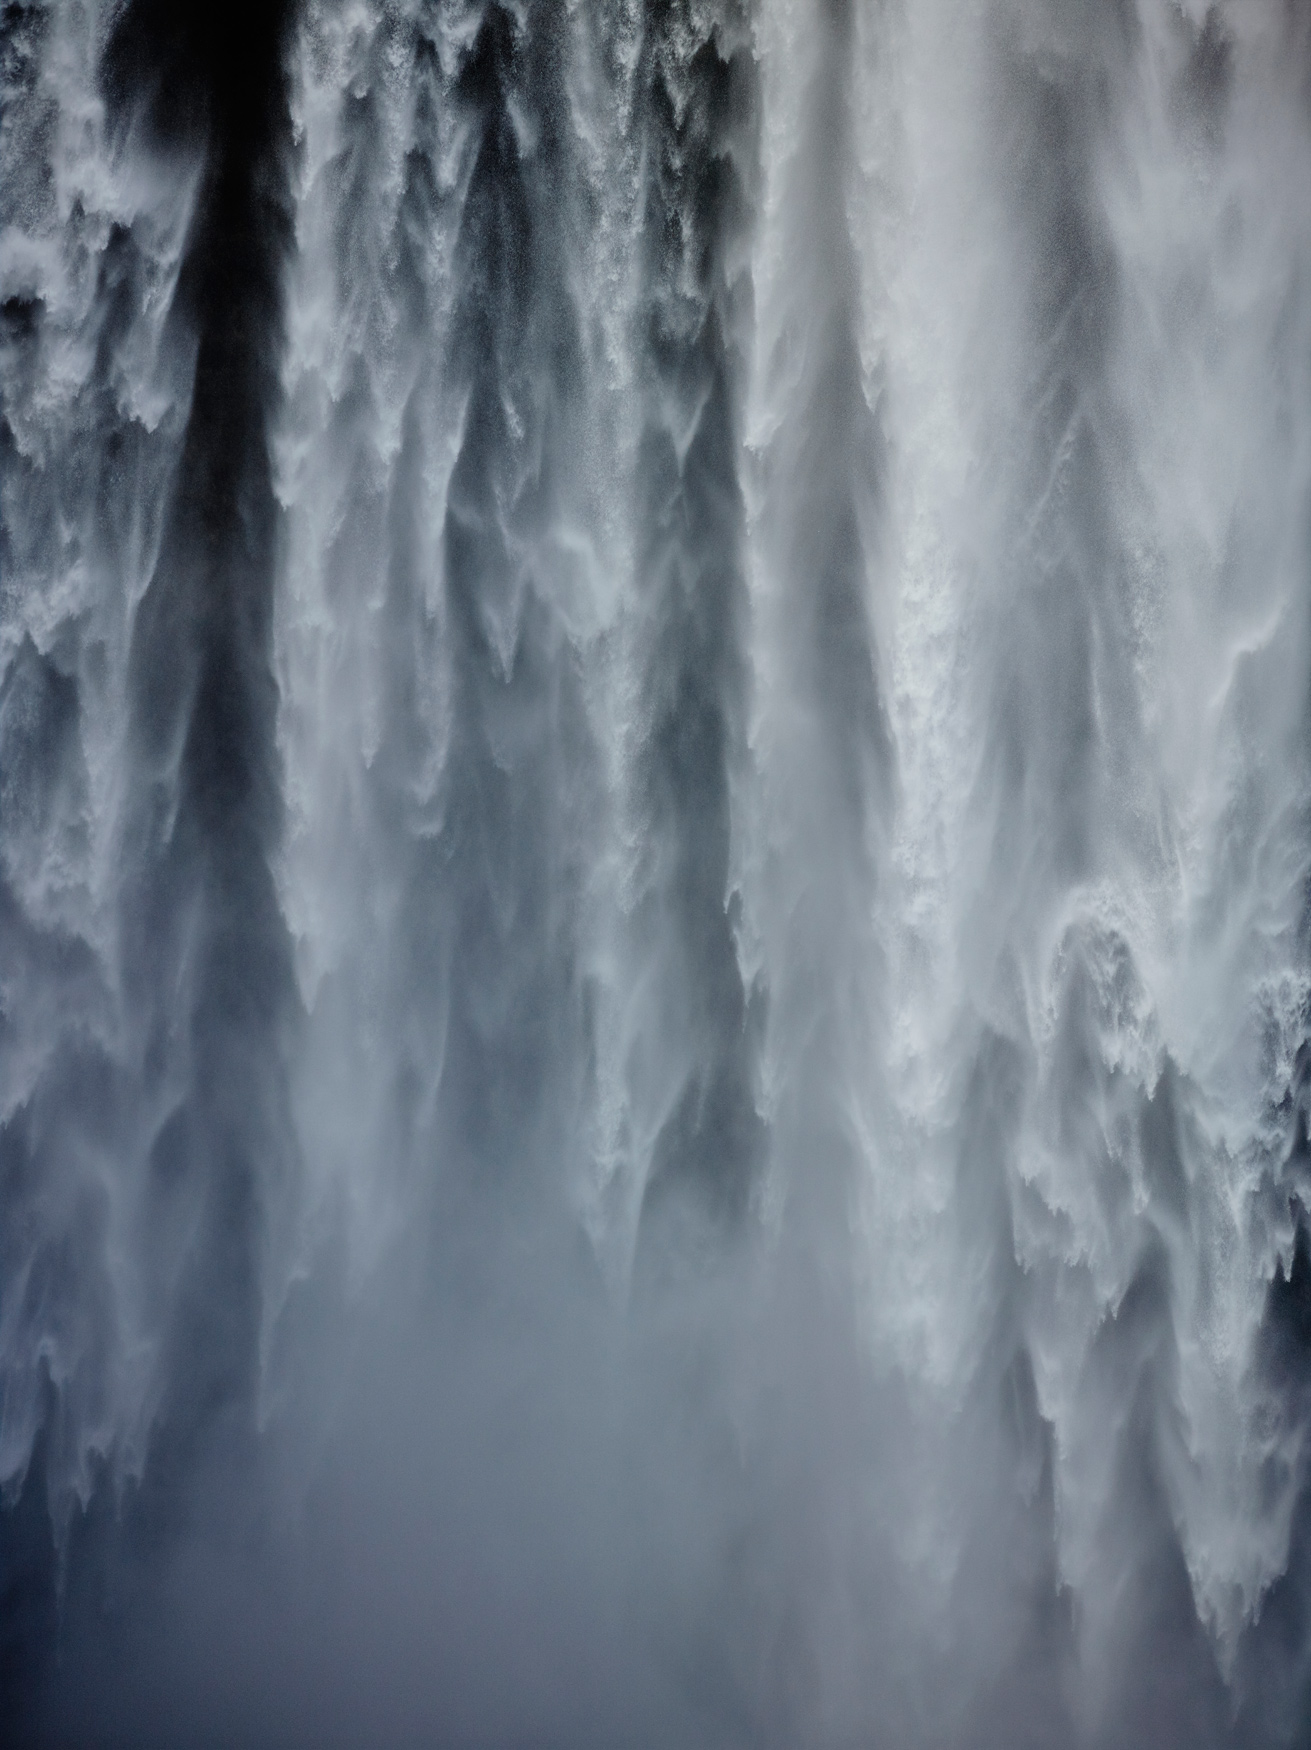 "Detail of Skógafoss Waterfall"